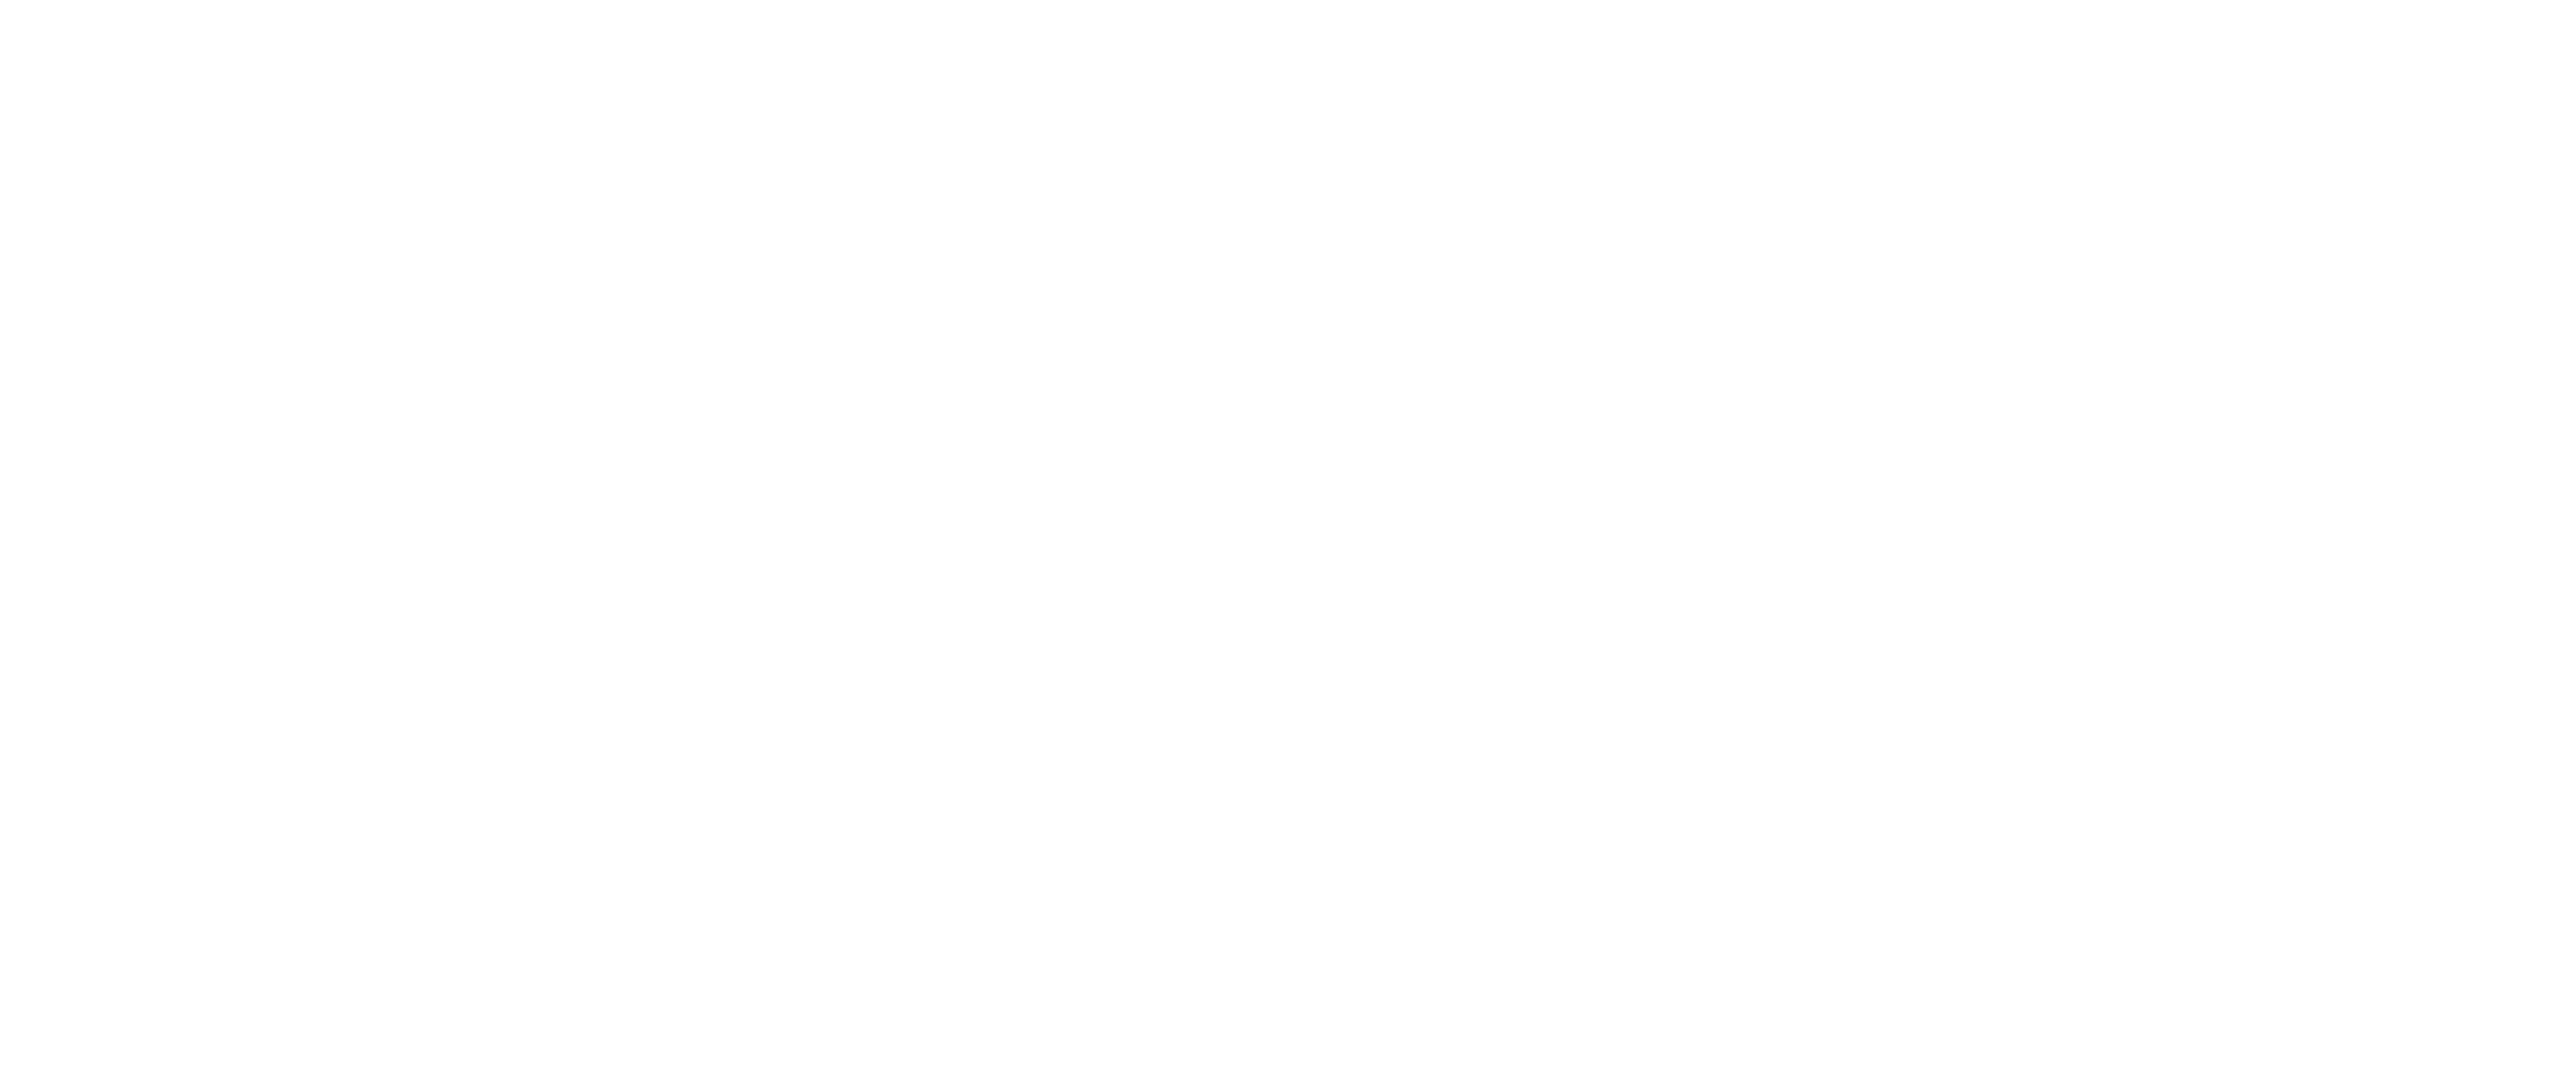 The 46 Bar